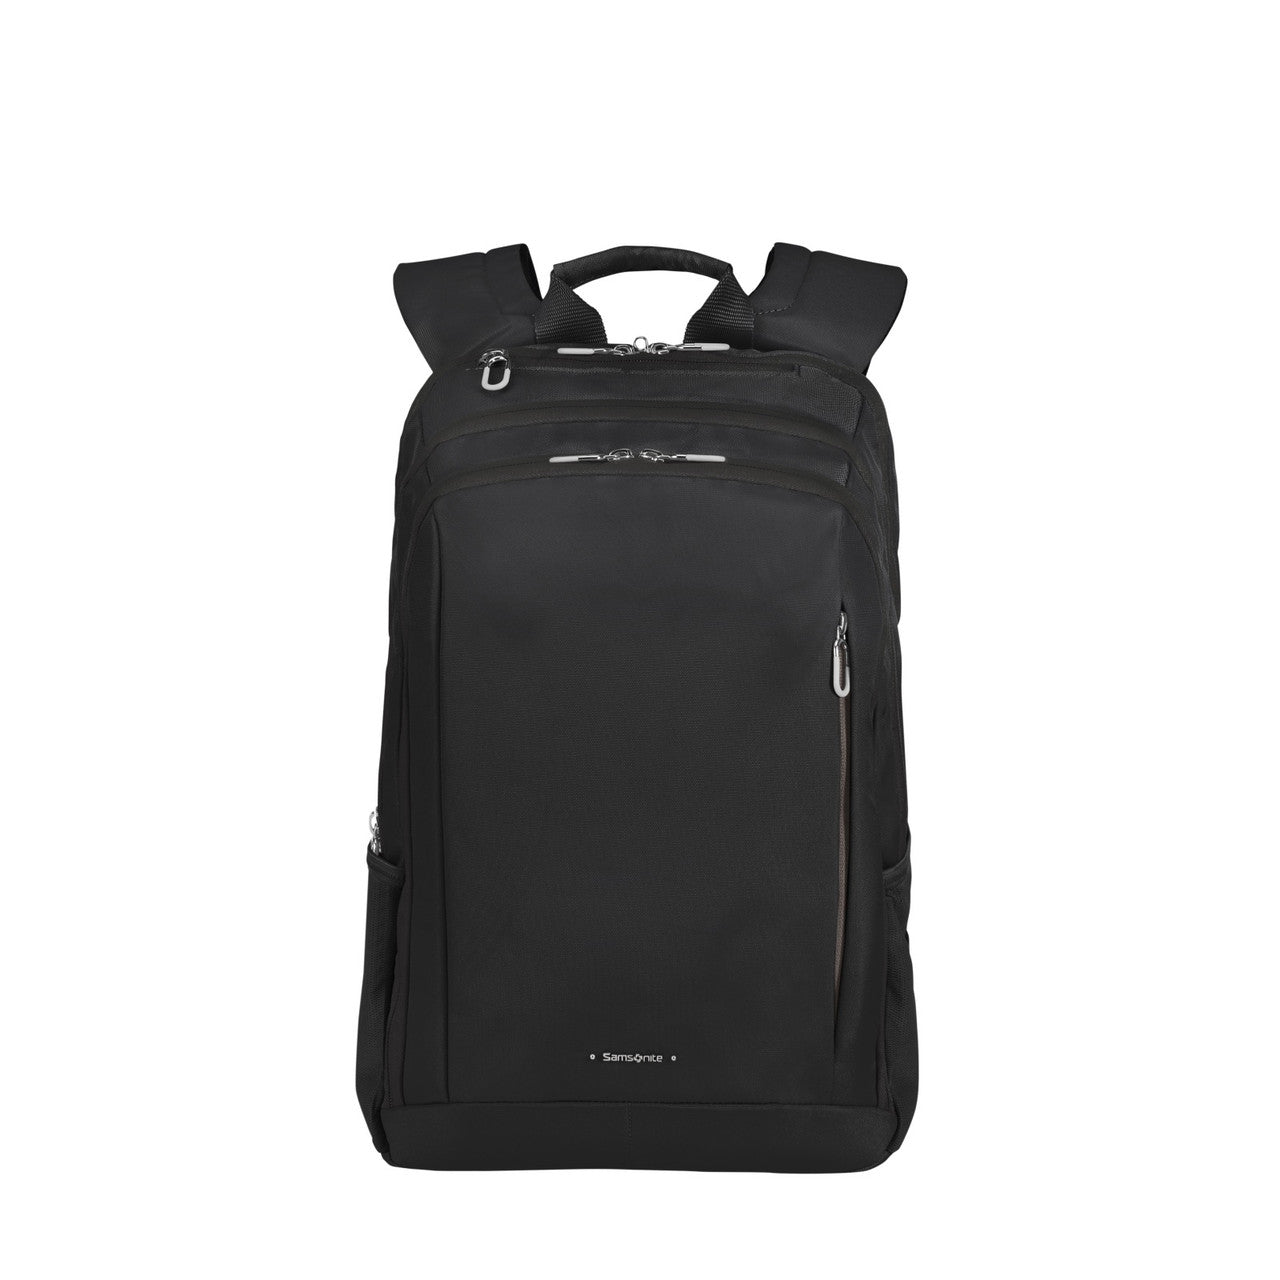 Samsonite - GUARDIT CLASSY 15.6in Backpack - Black